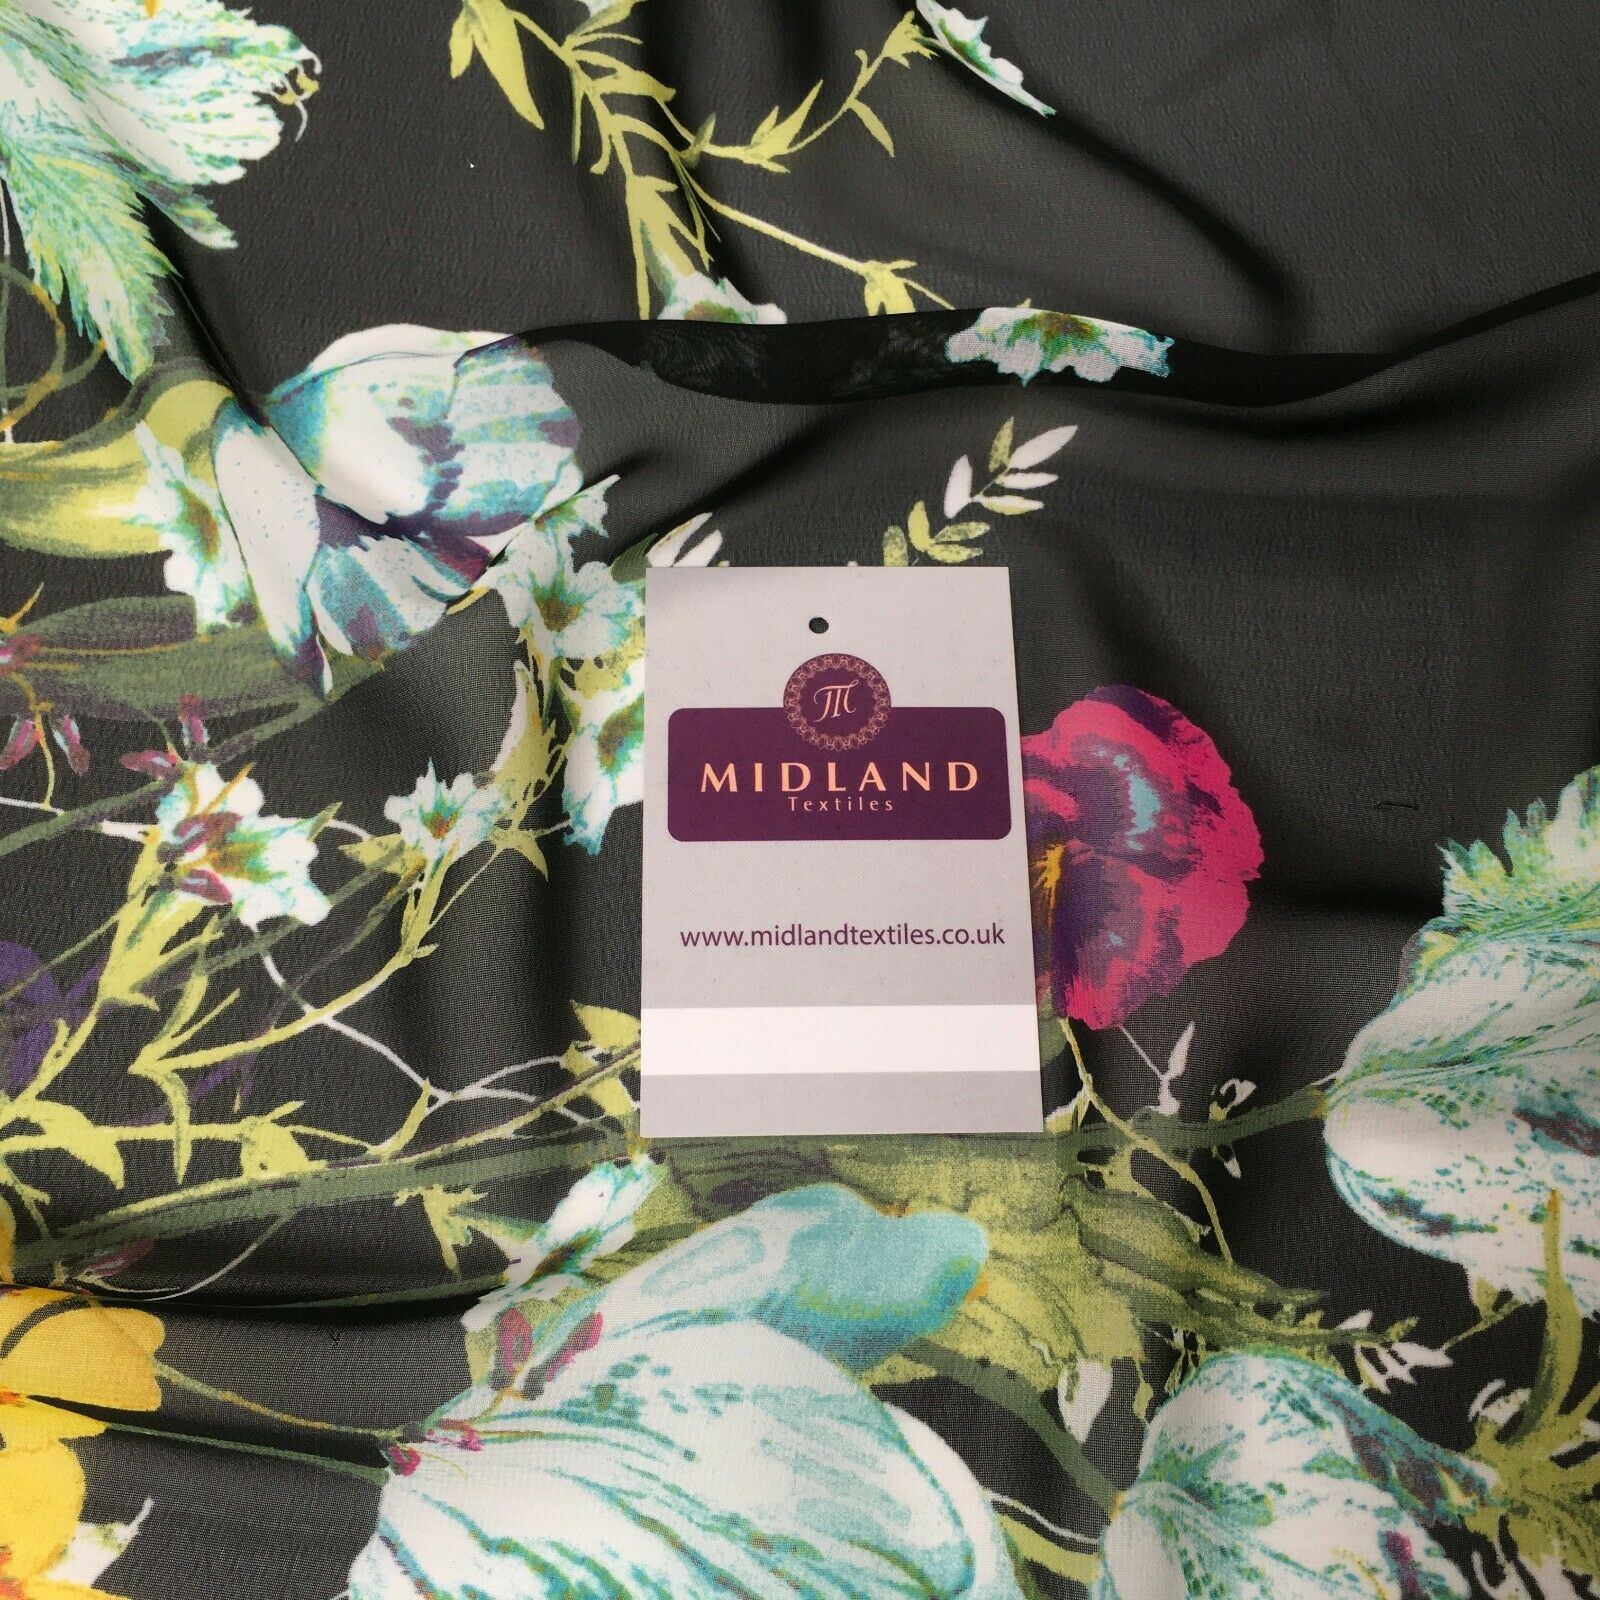 Black floral printed Crepe chiffon Dress Fabric MK1190-36 Mtex